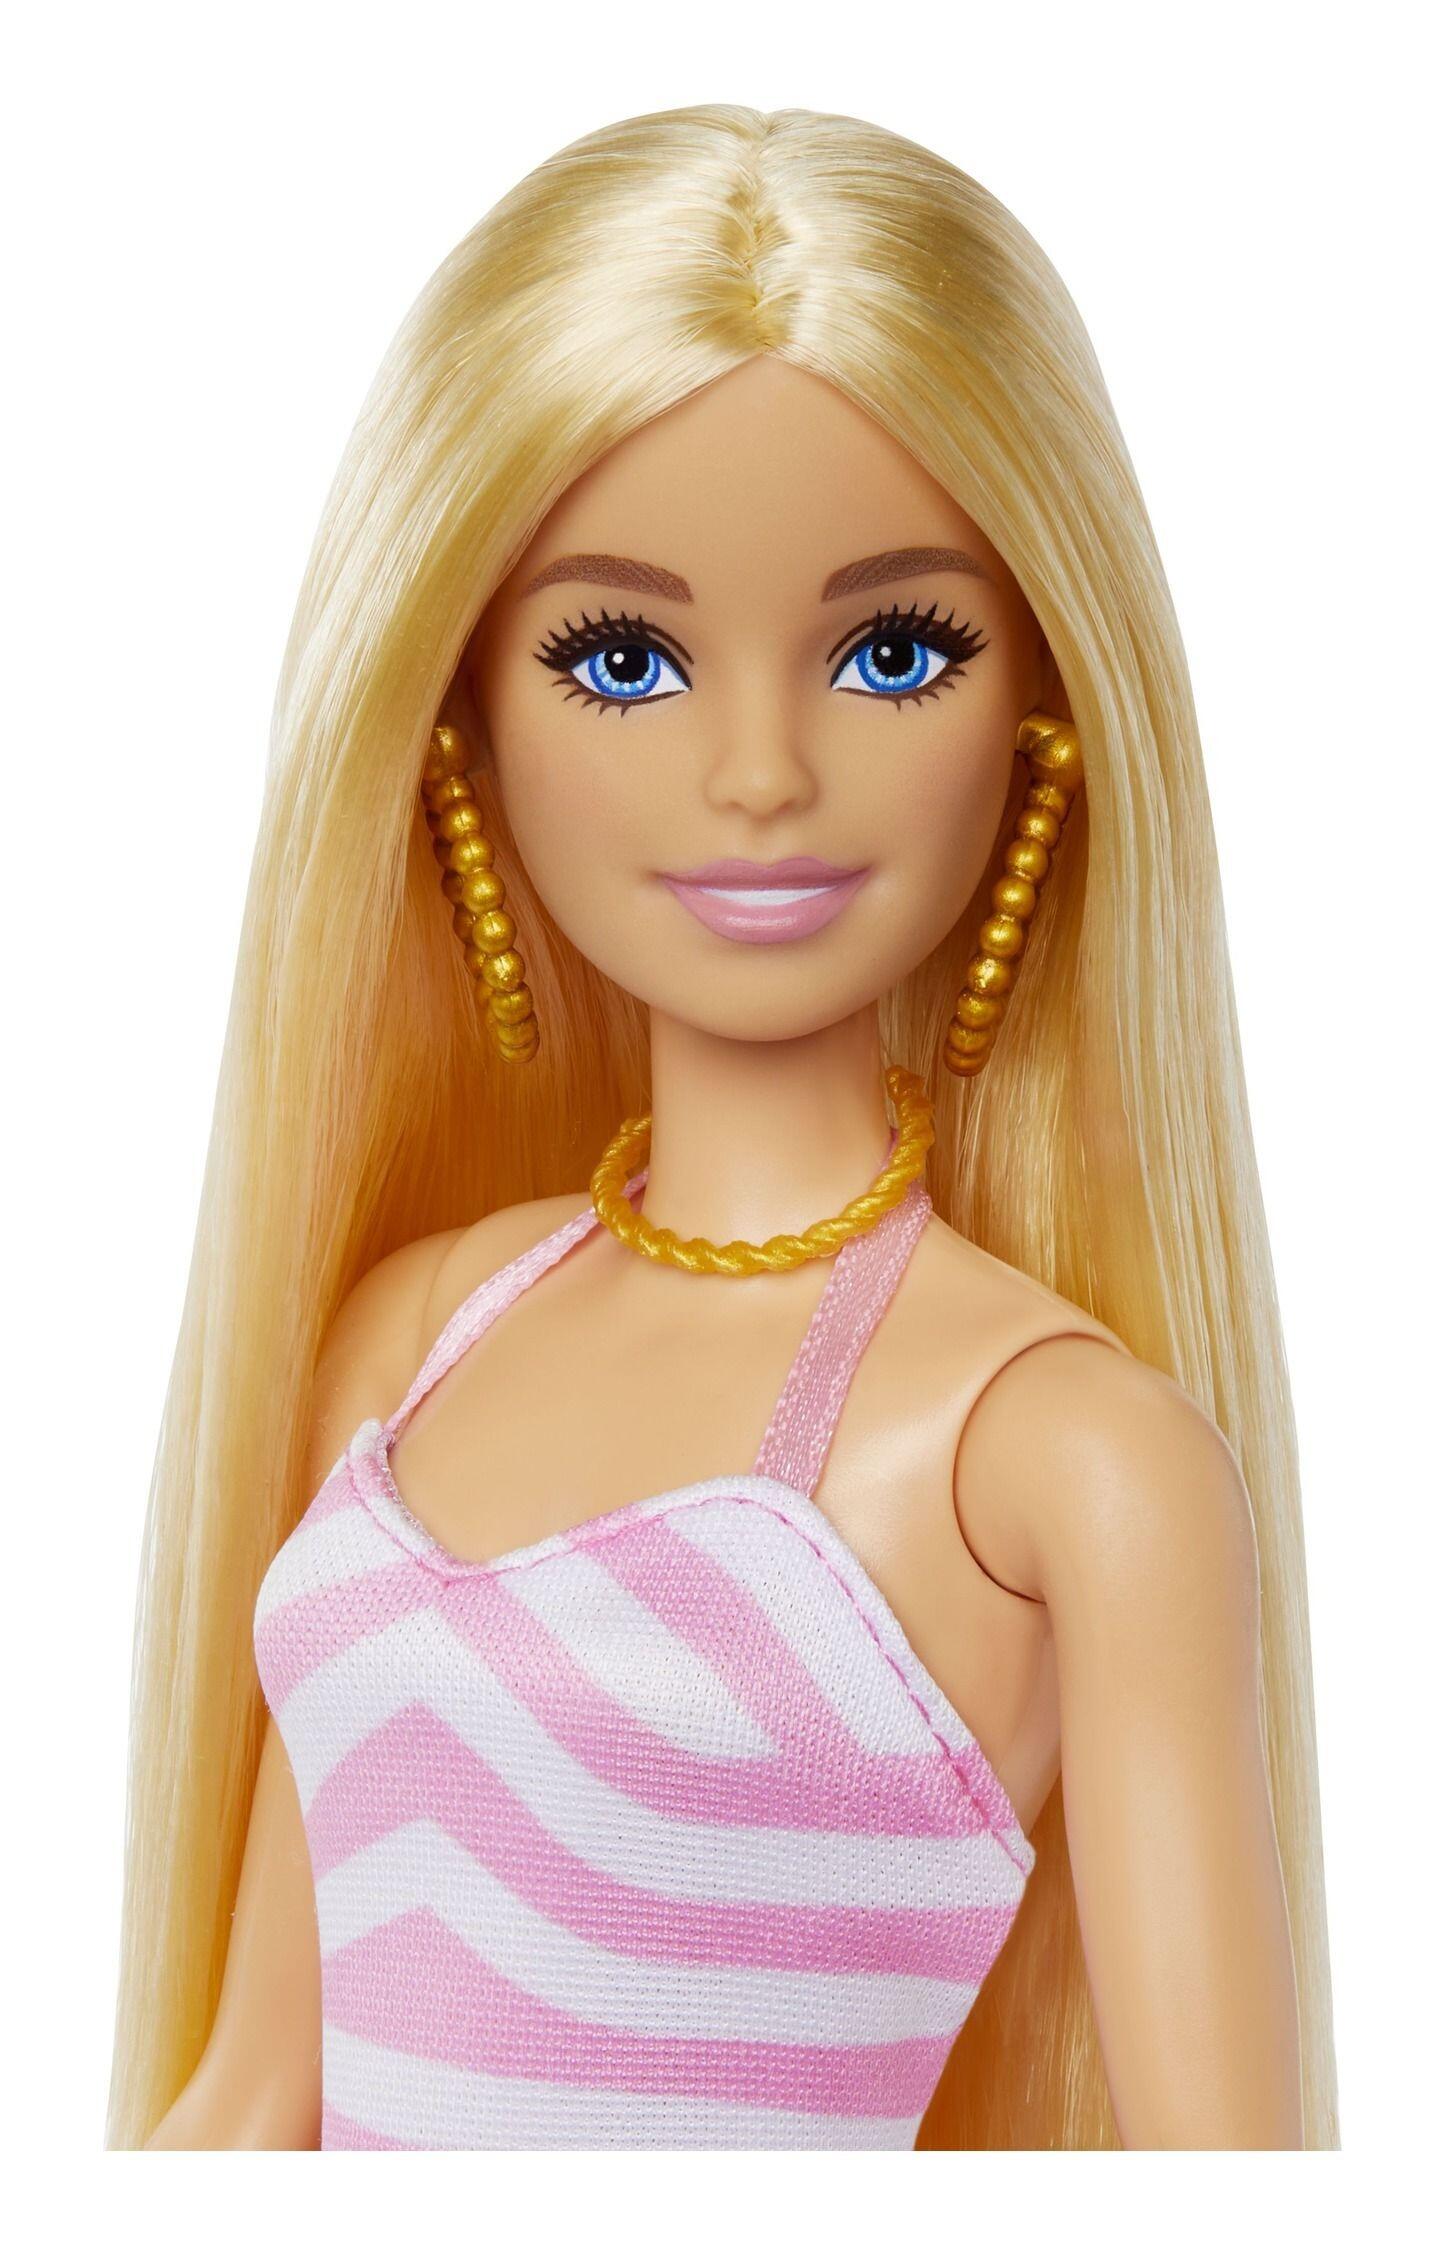 Barbie Movie Malibu Barbie Beach Doll